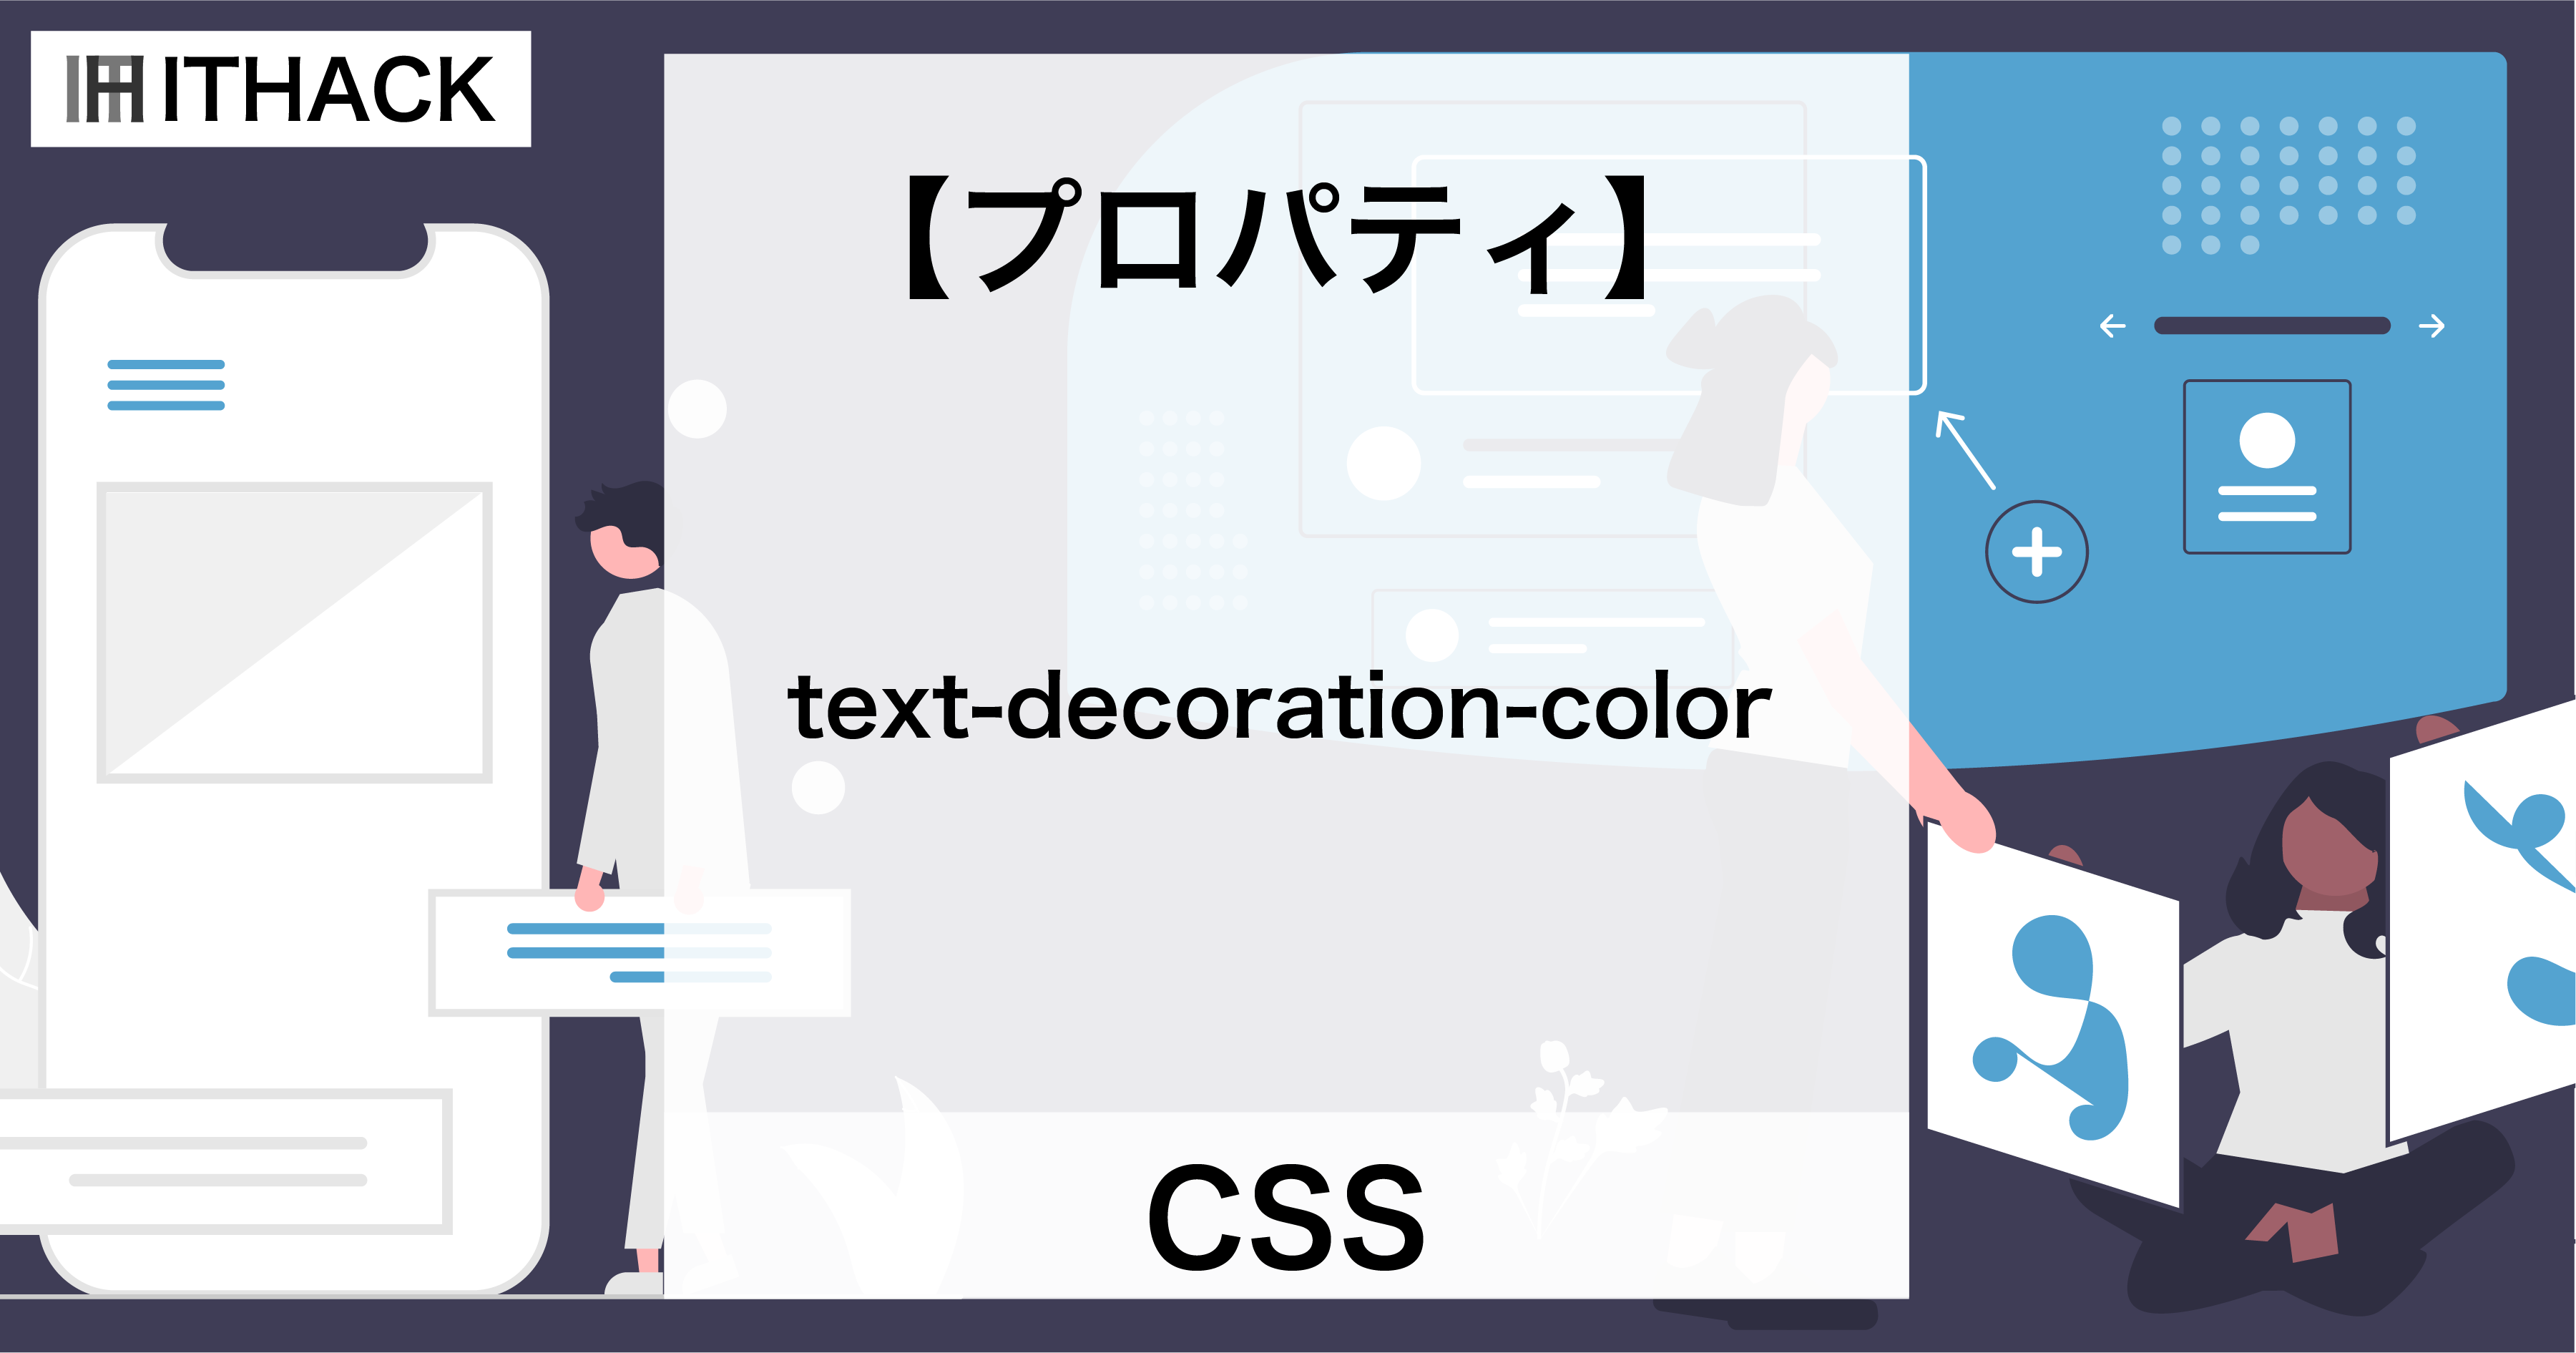 【CSS】text-decoration-color - テキストの装飾（カラー）